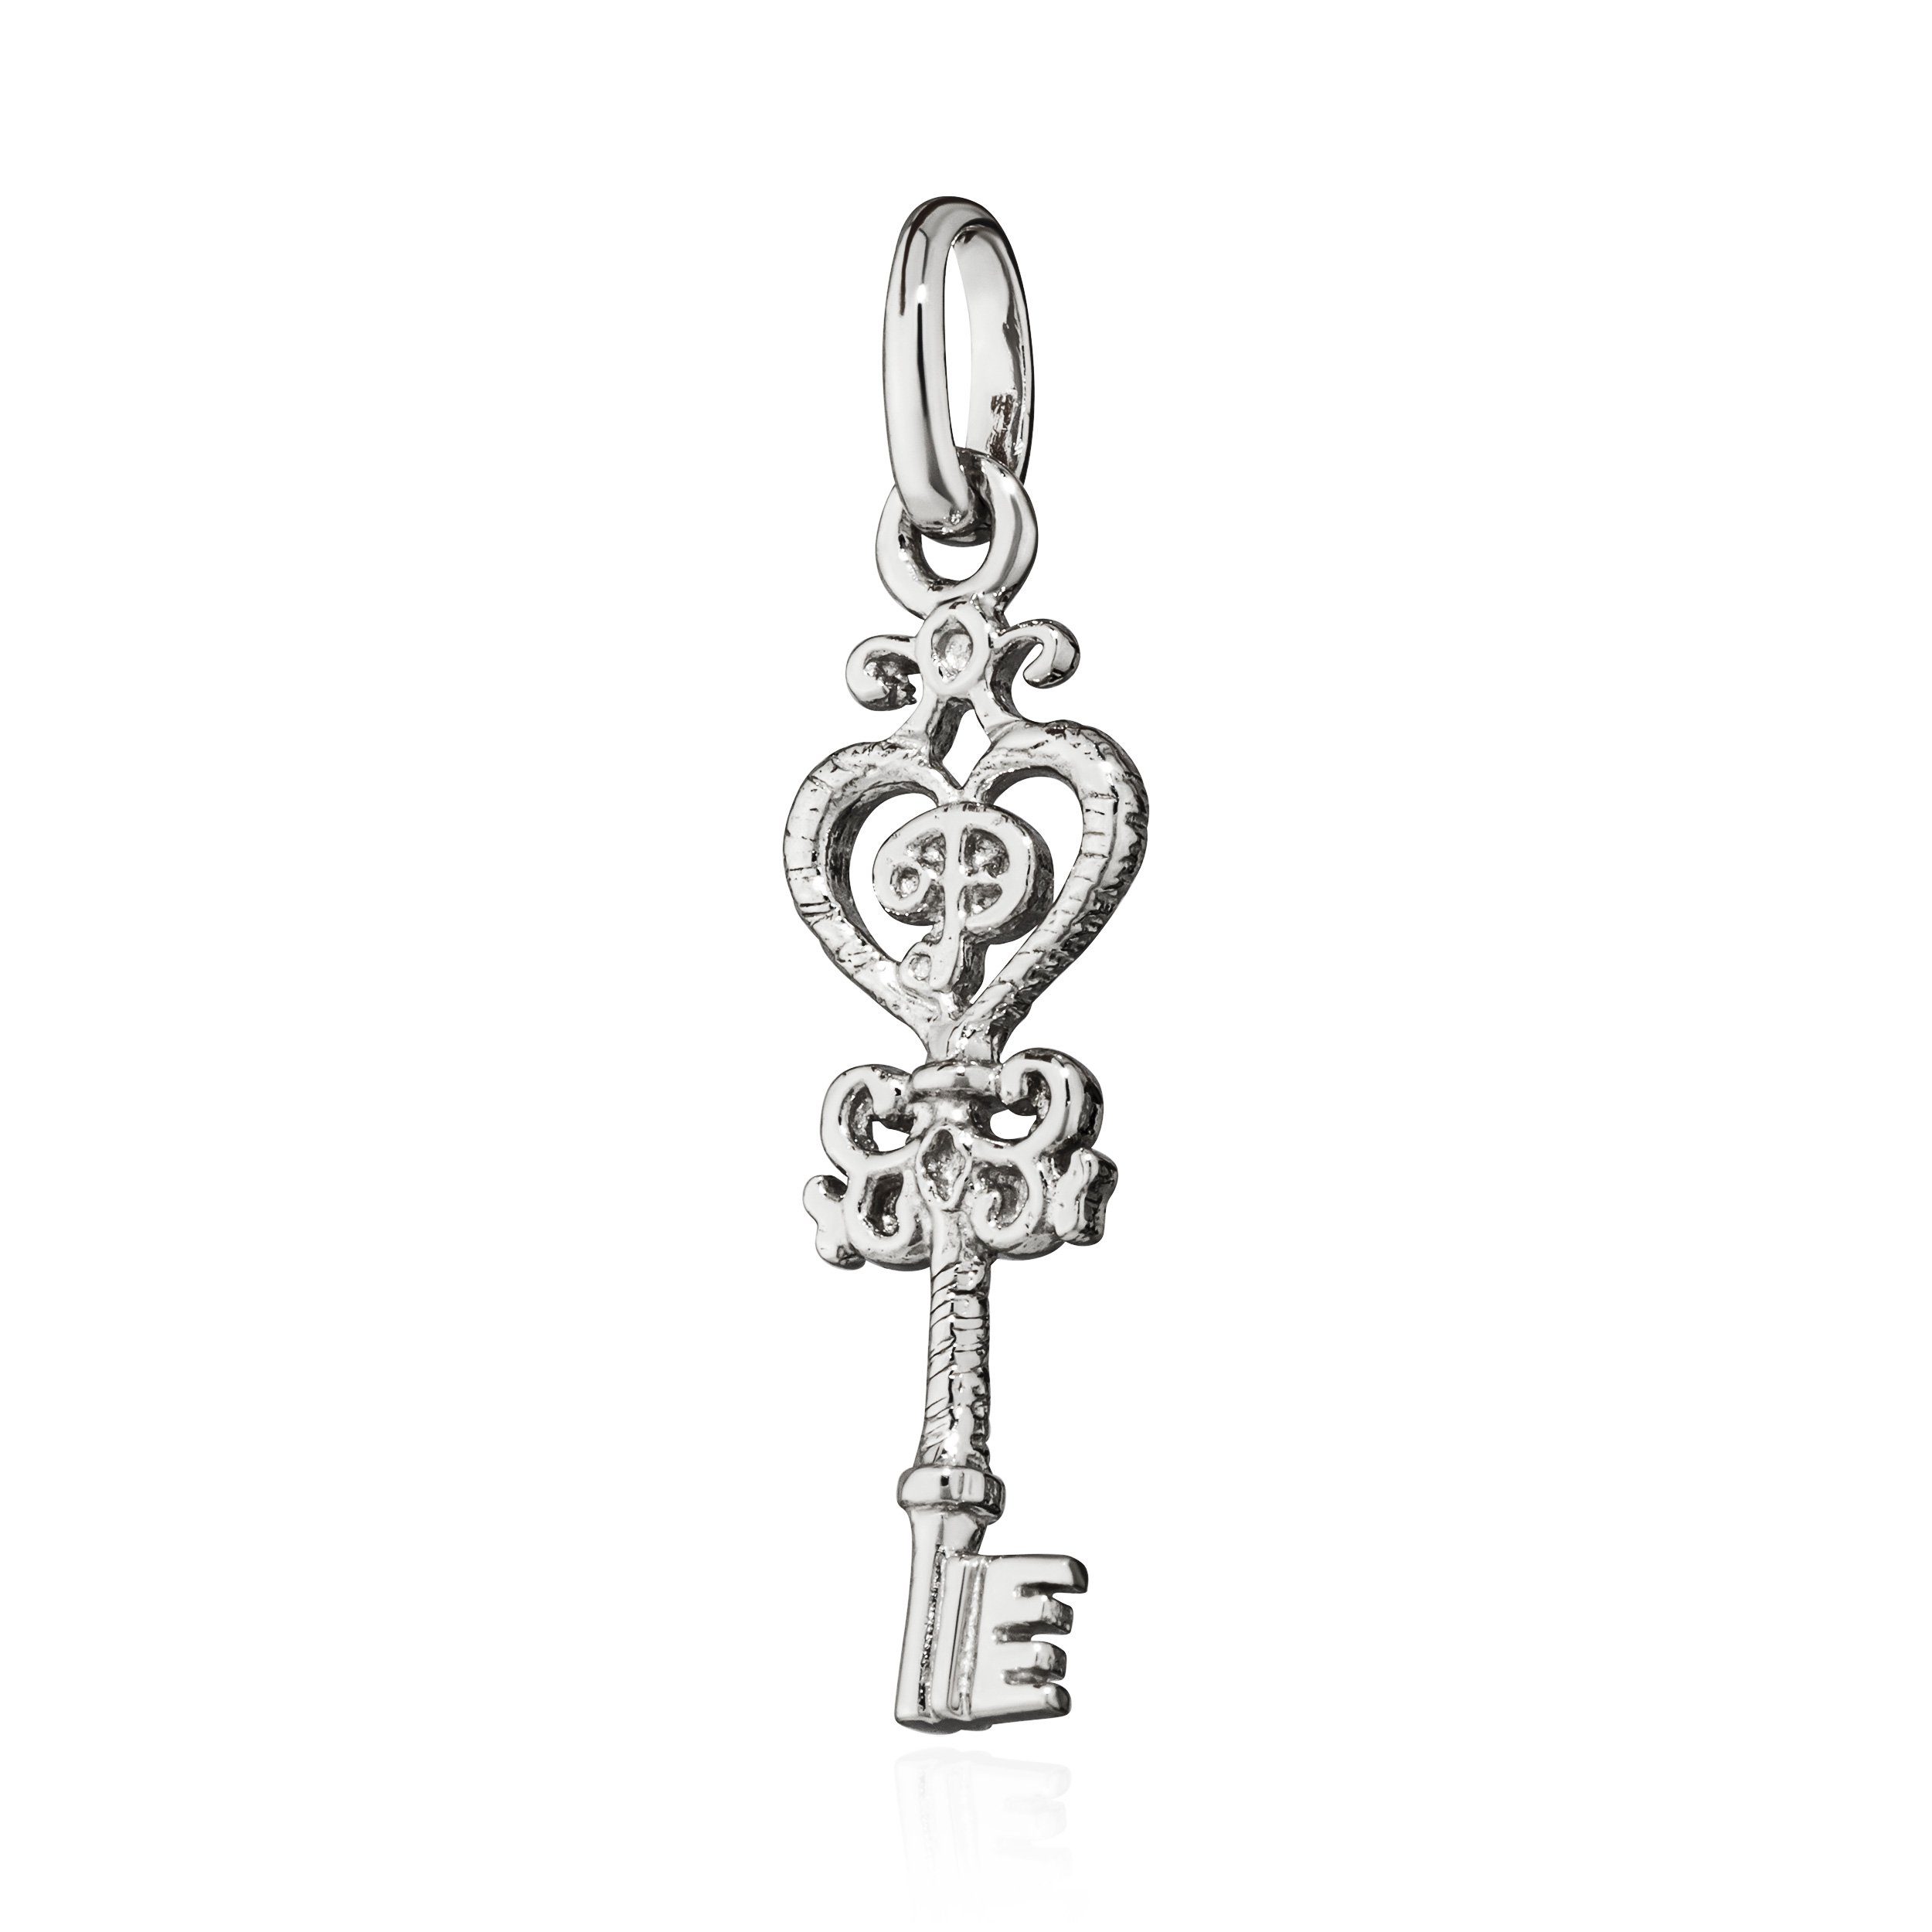 NKlaus Kettenanhänger Kettenanhänger Schlüssel 925 Silber rhodiniert 22x7mm Amulett Talisman